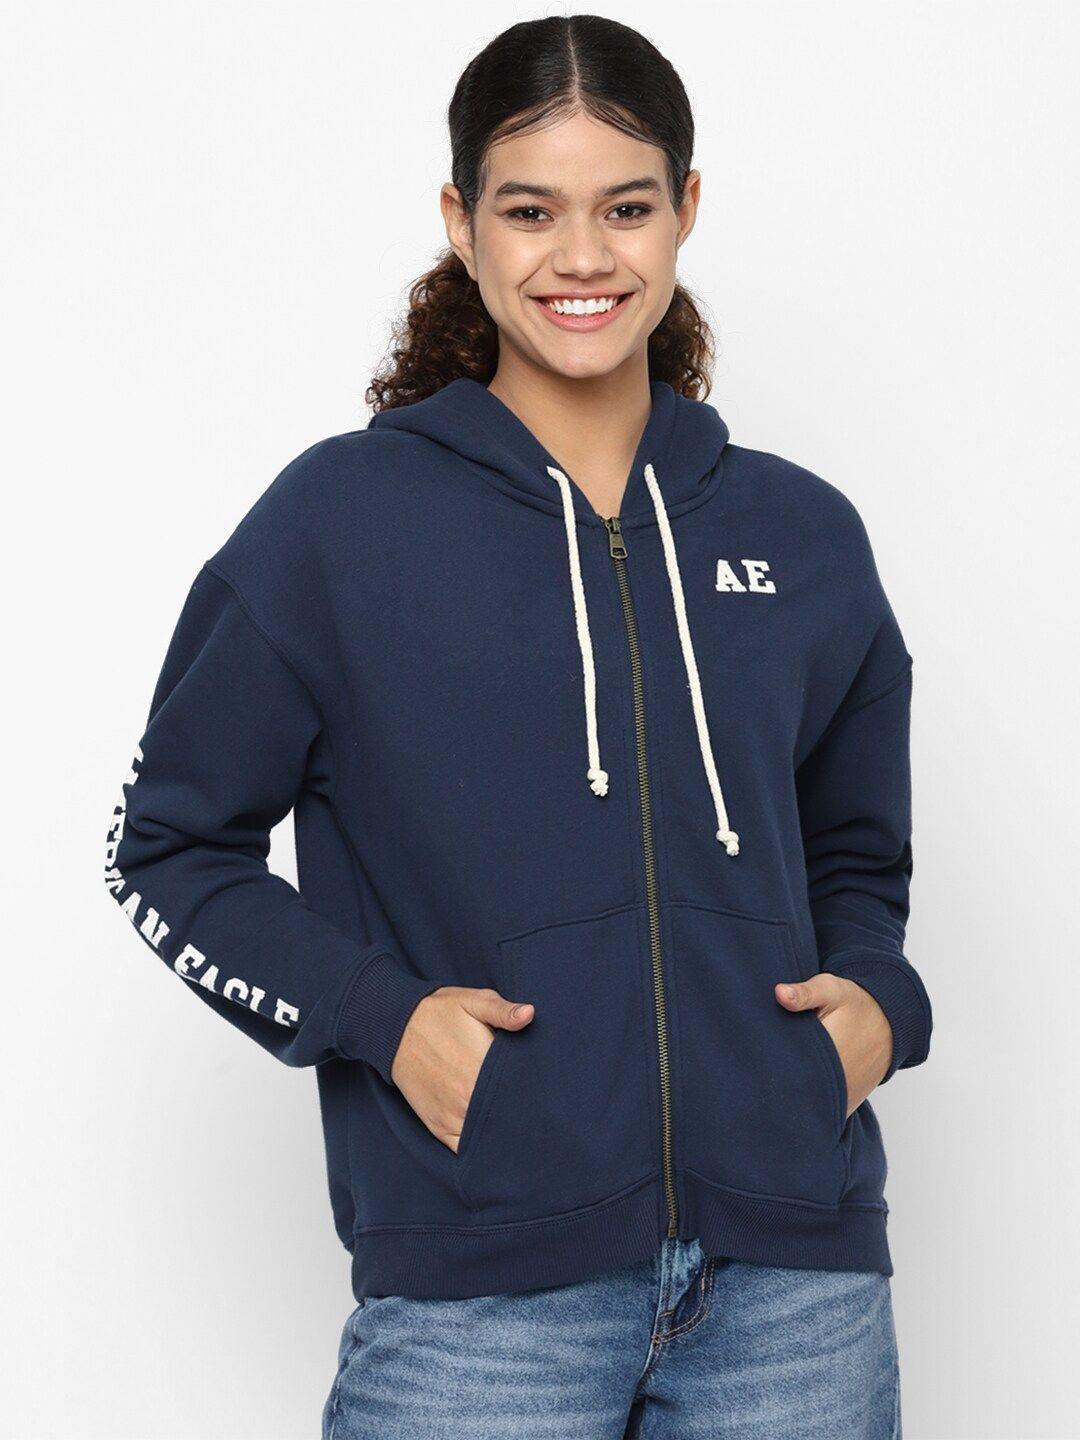 american eagle outfitters women navy blue printed hooded sweatshirt